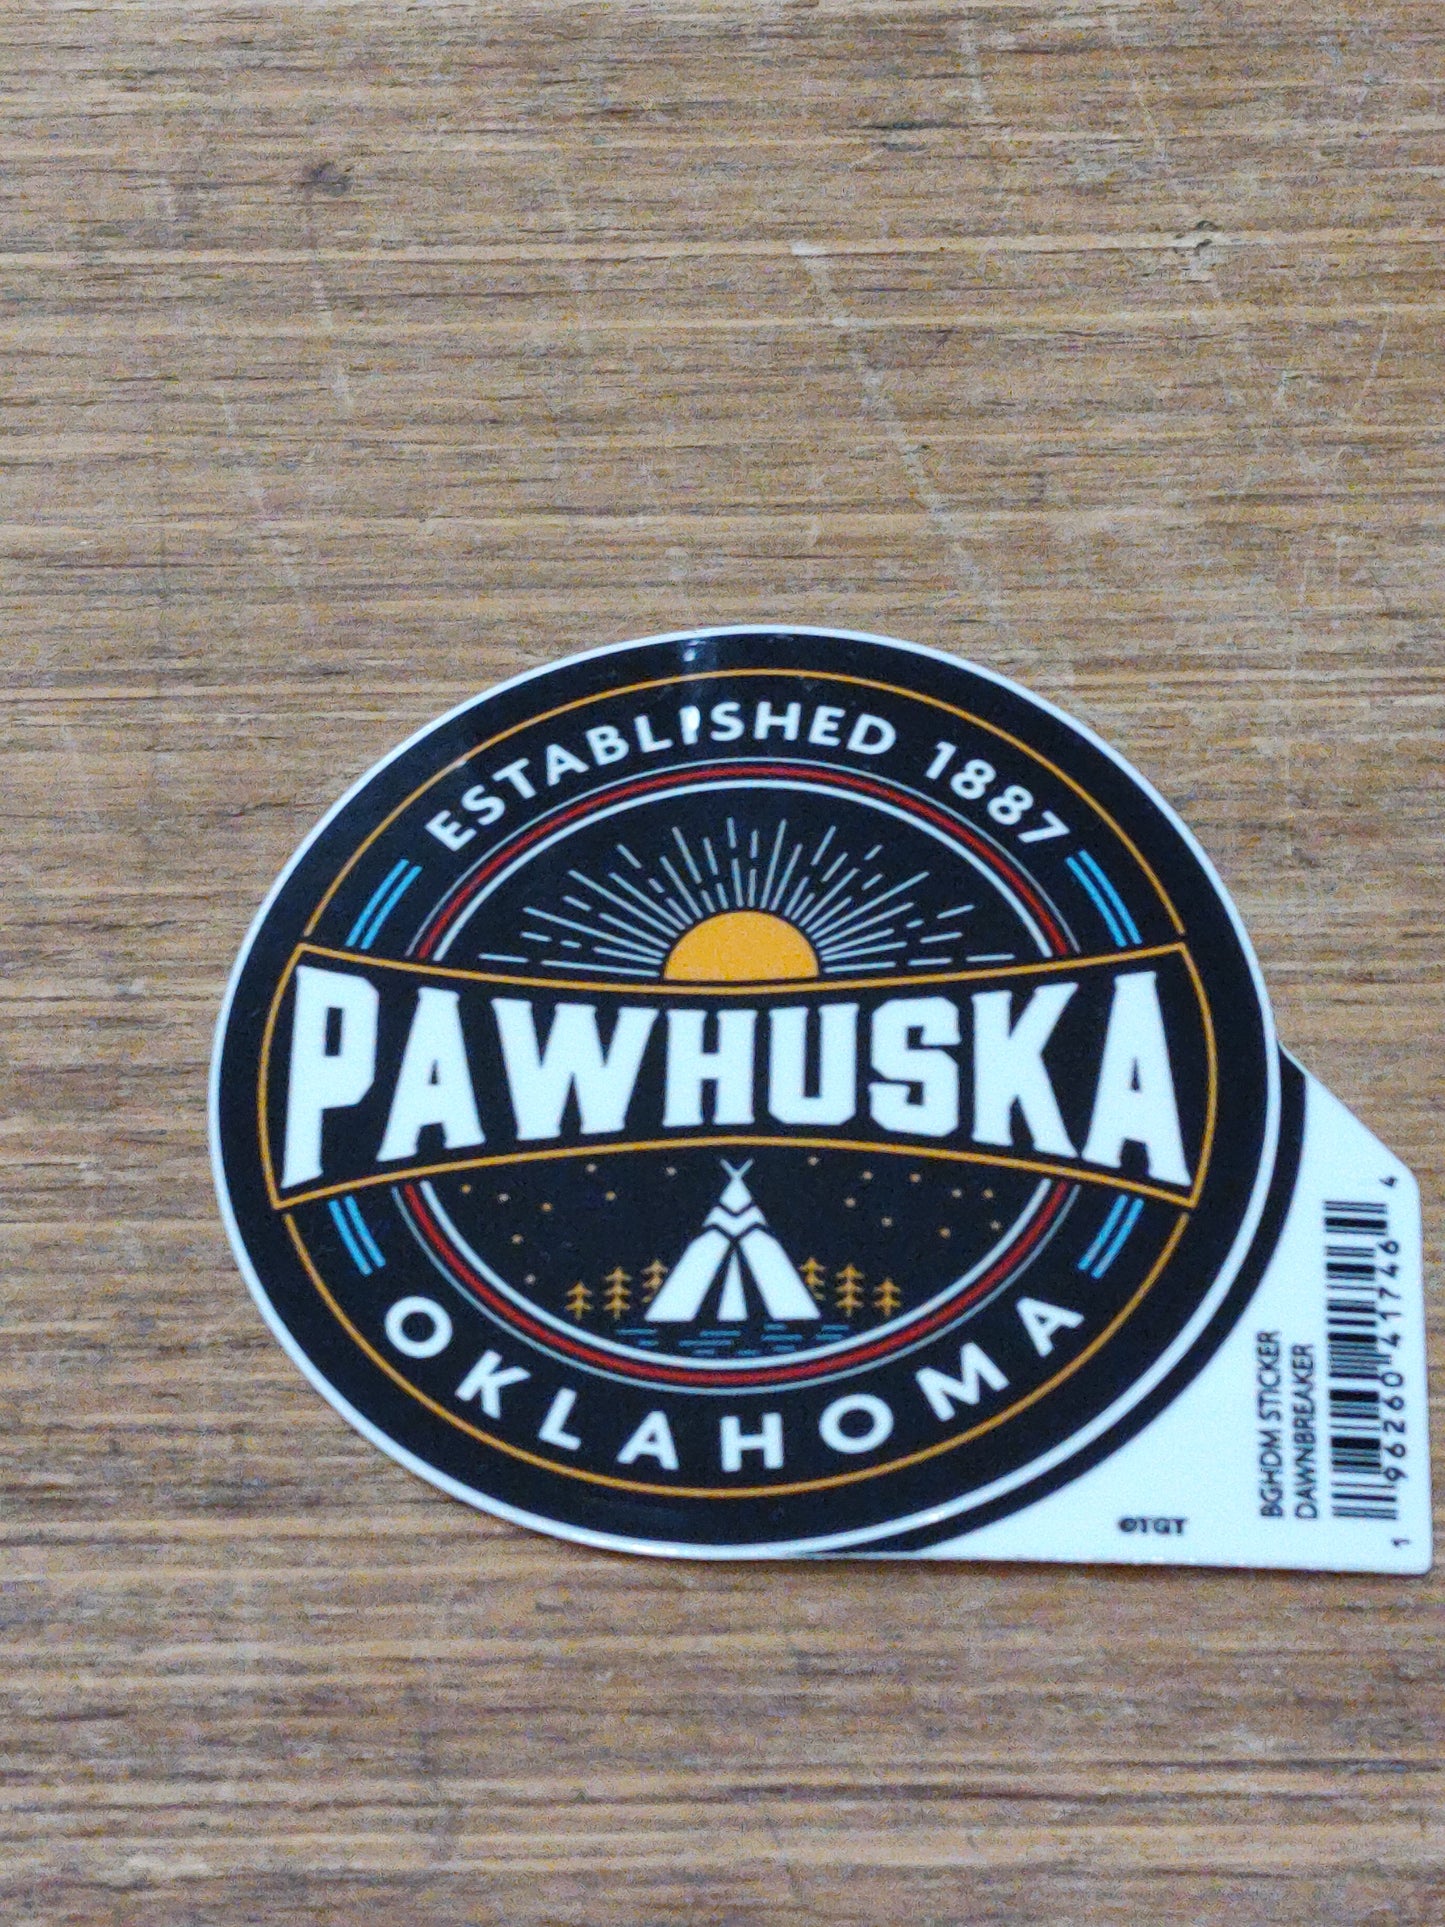 Established 1887 Sun and Tipi Pawhuska, OK - sticker